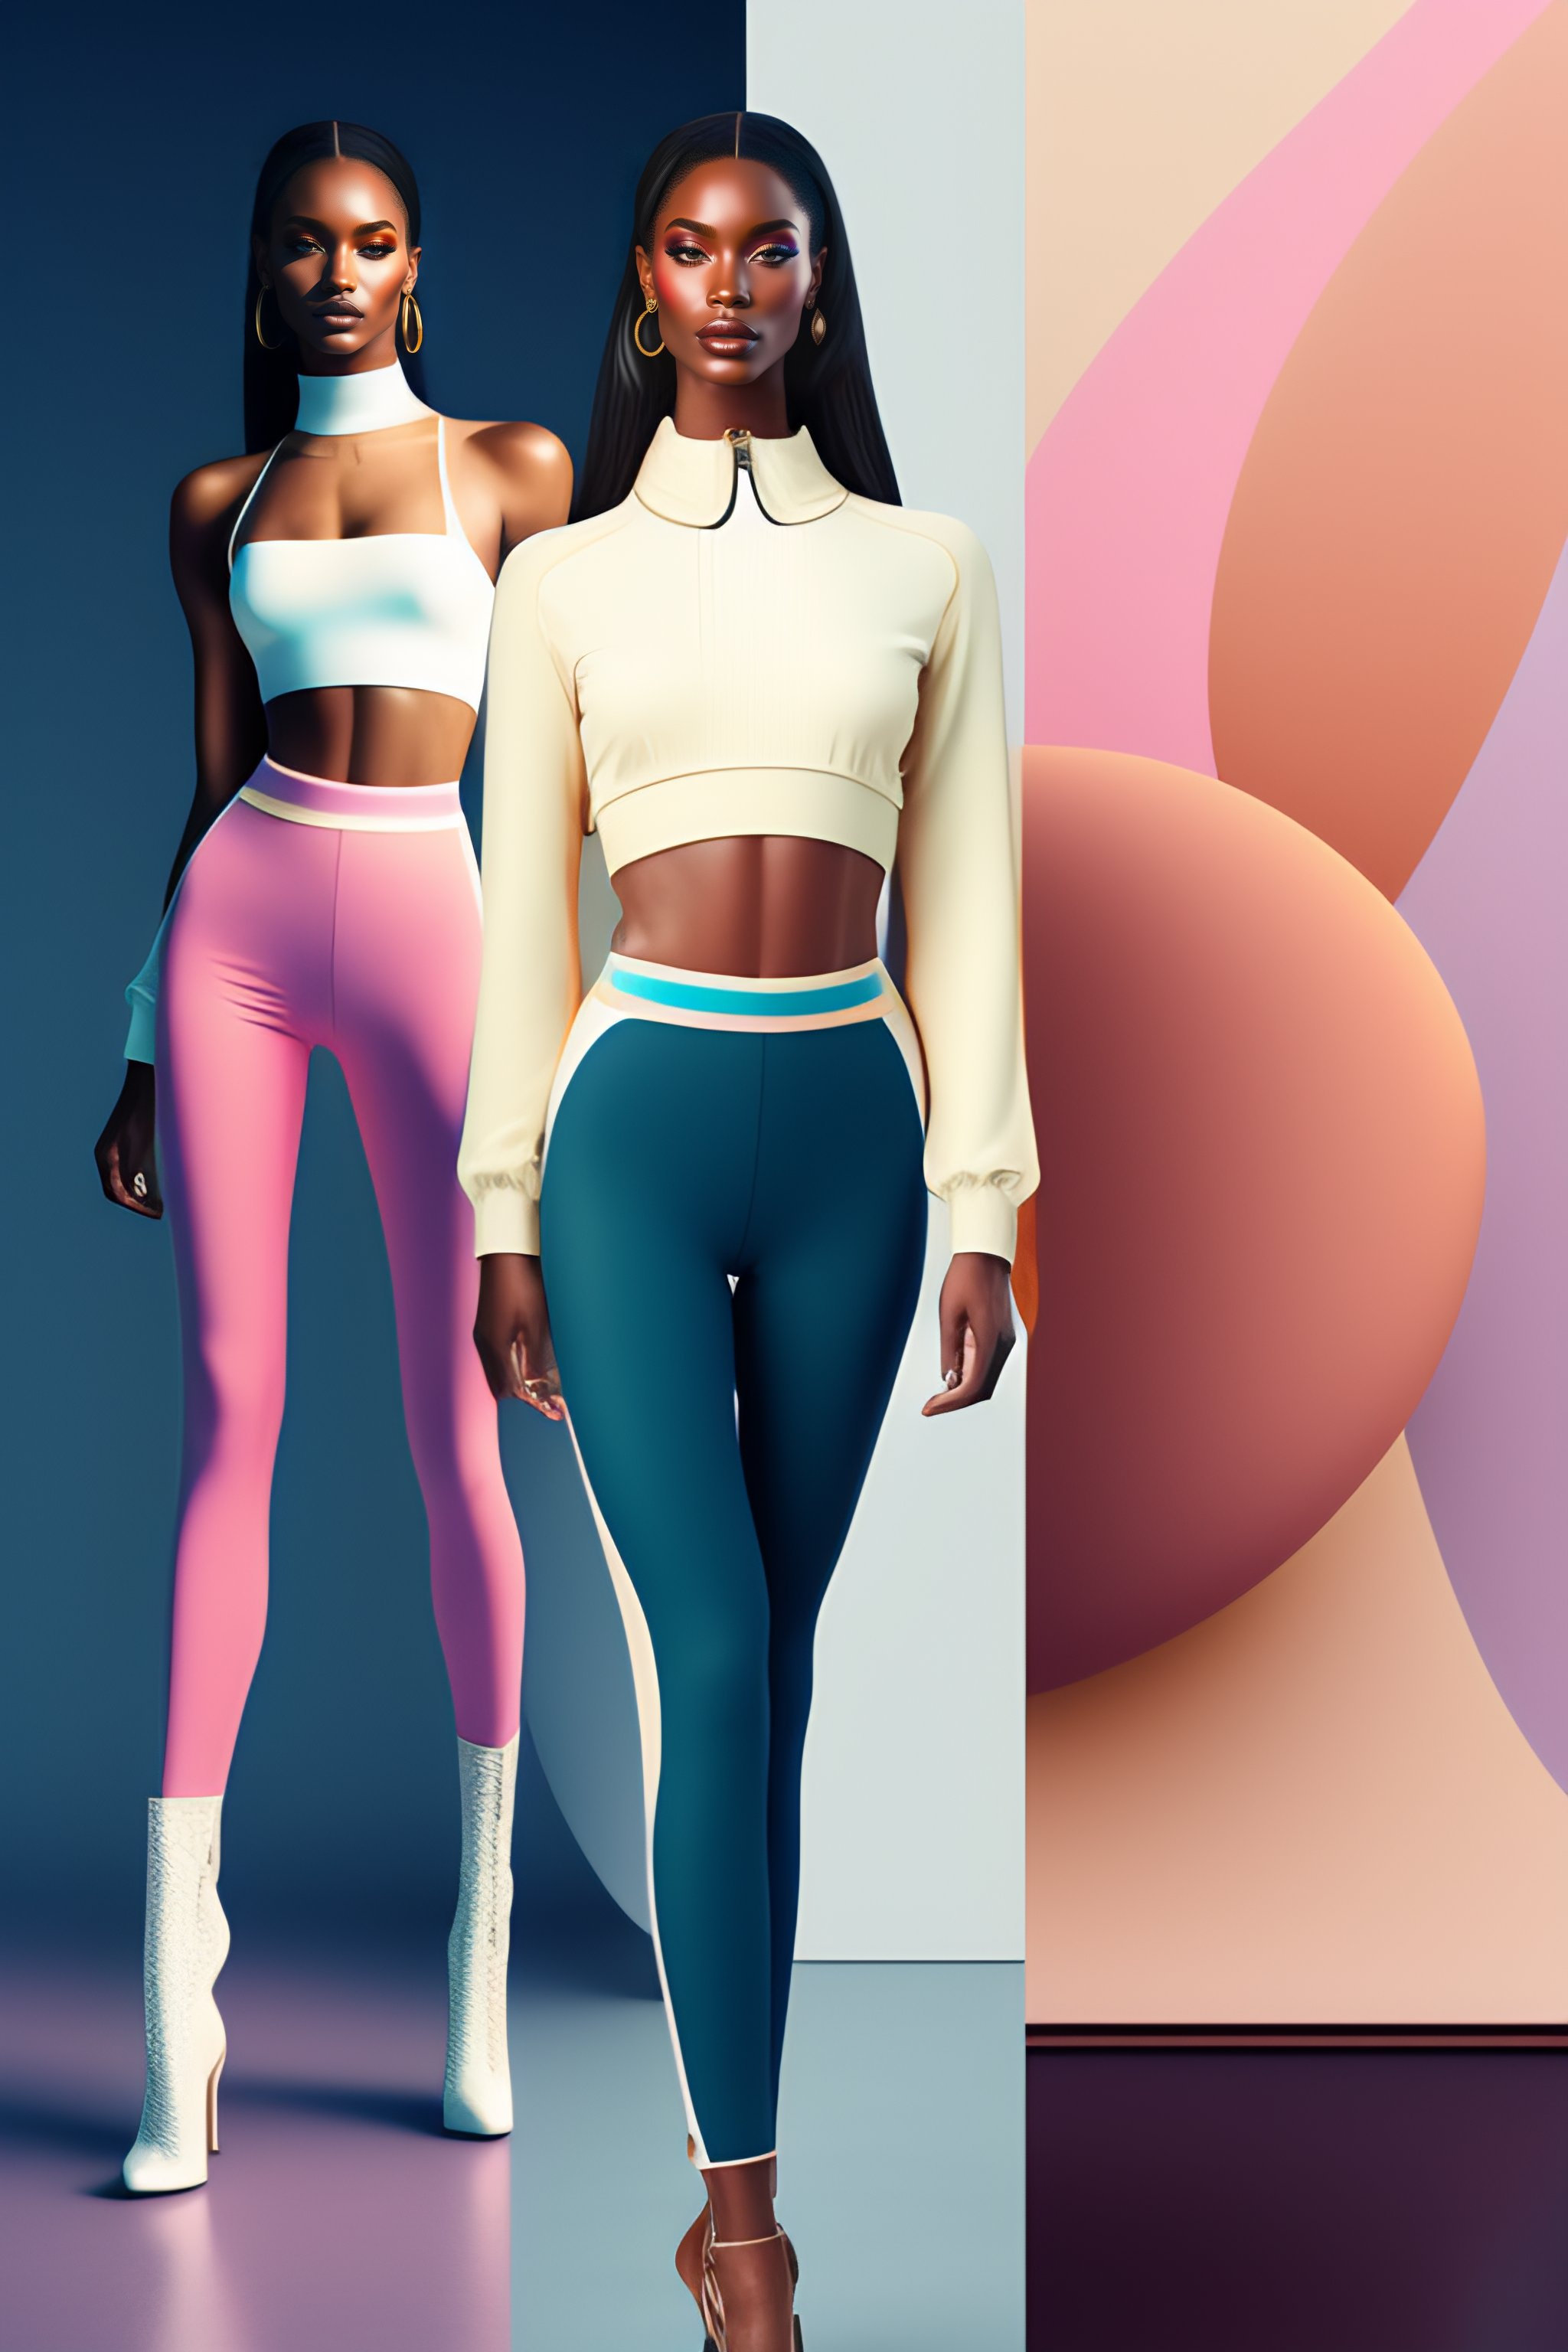 Lexica - Create a feminine, abstract 3D design using a soft color